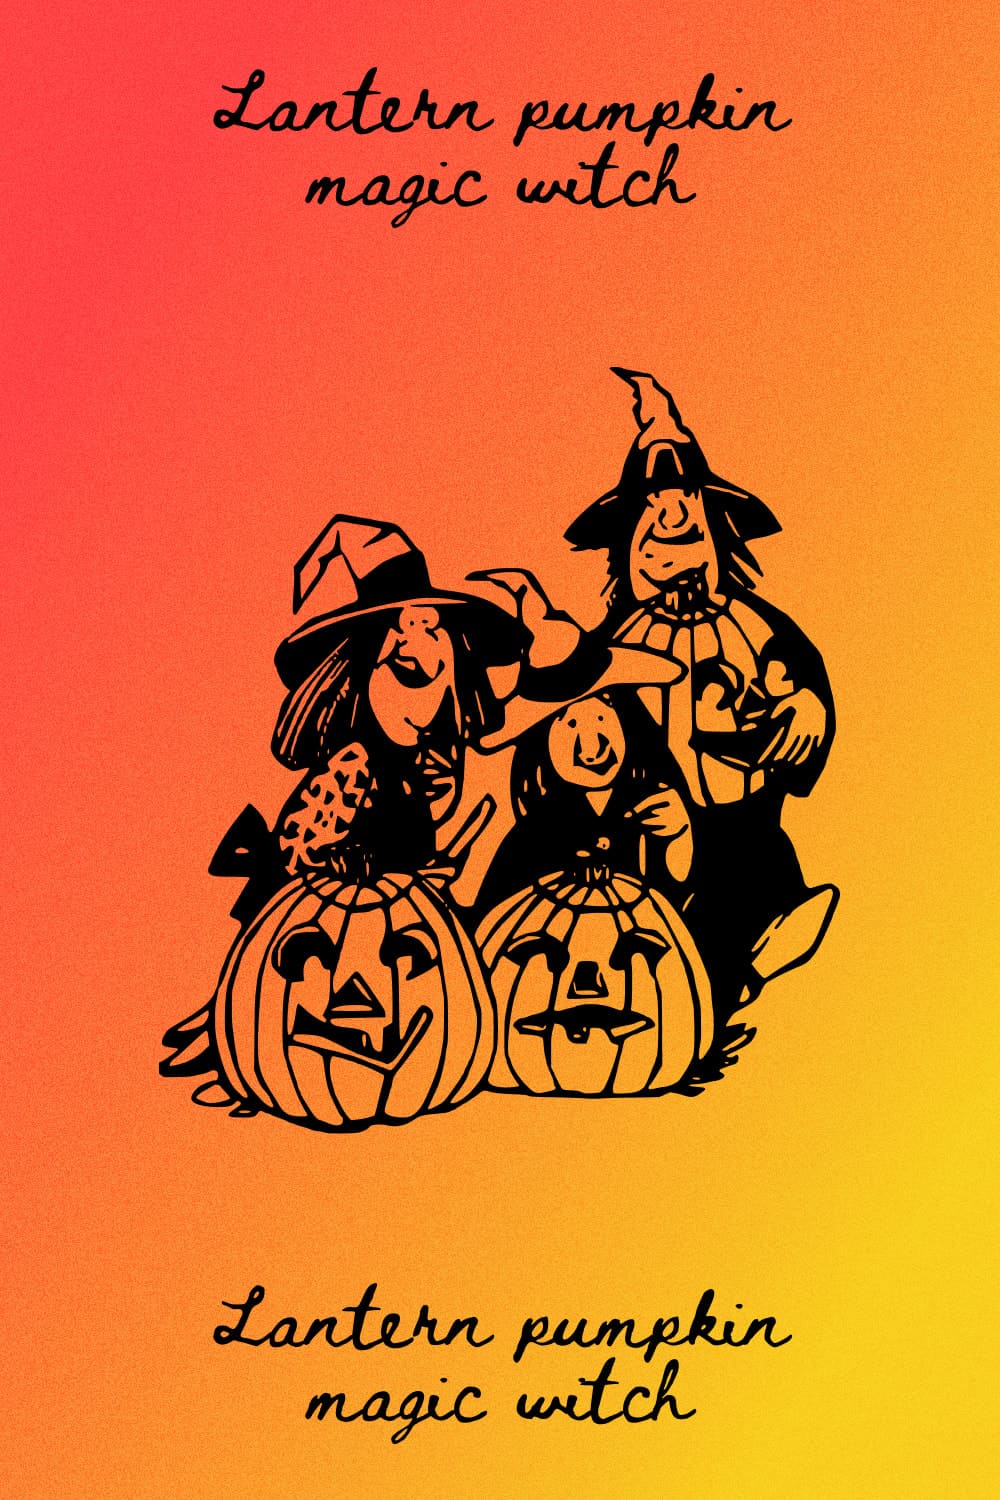 Lantern Pumpkin Magic Witch - Pinterest Image.